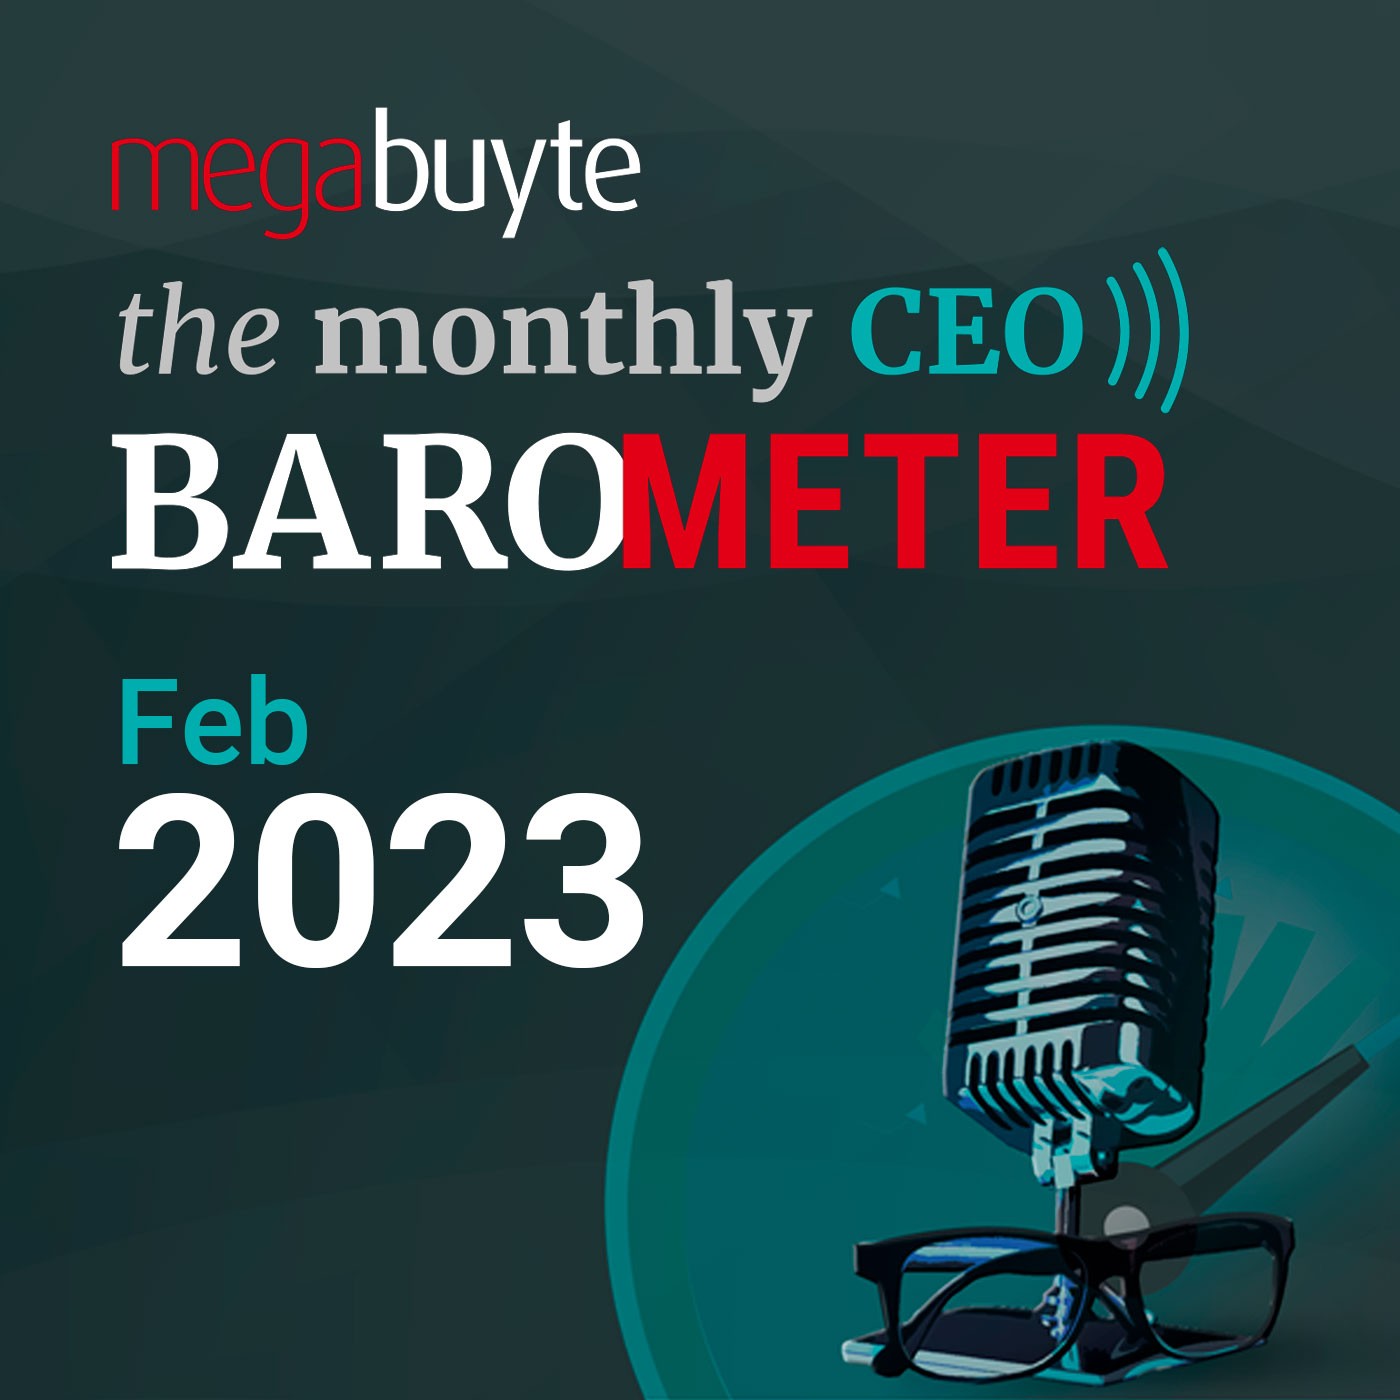 Megabuyte CEOBarometer - February 2023 update